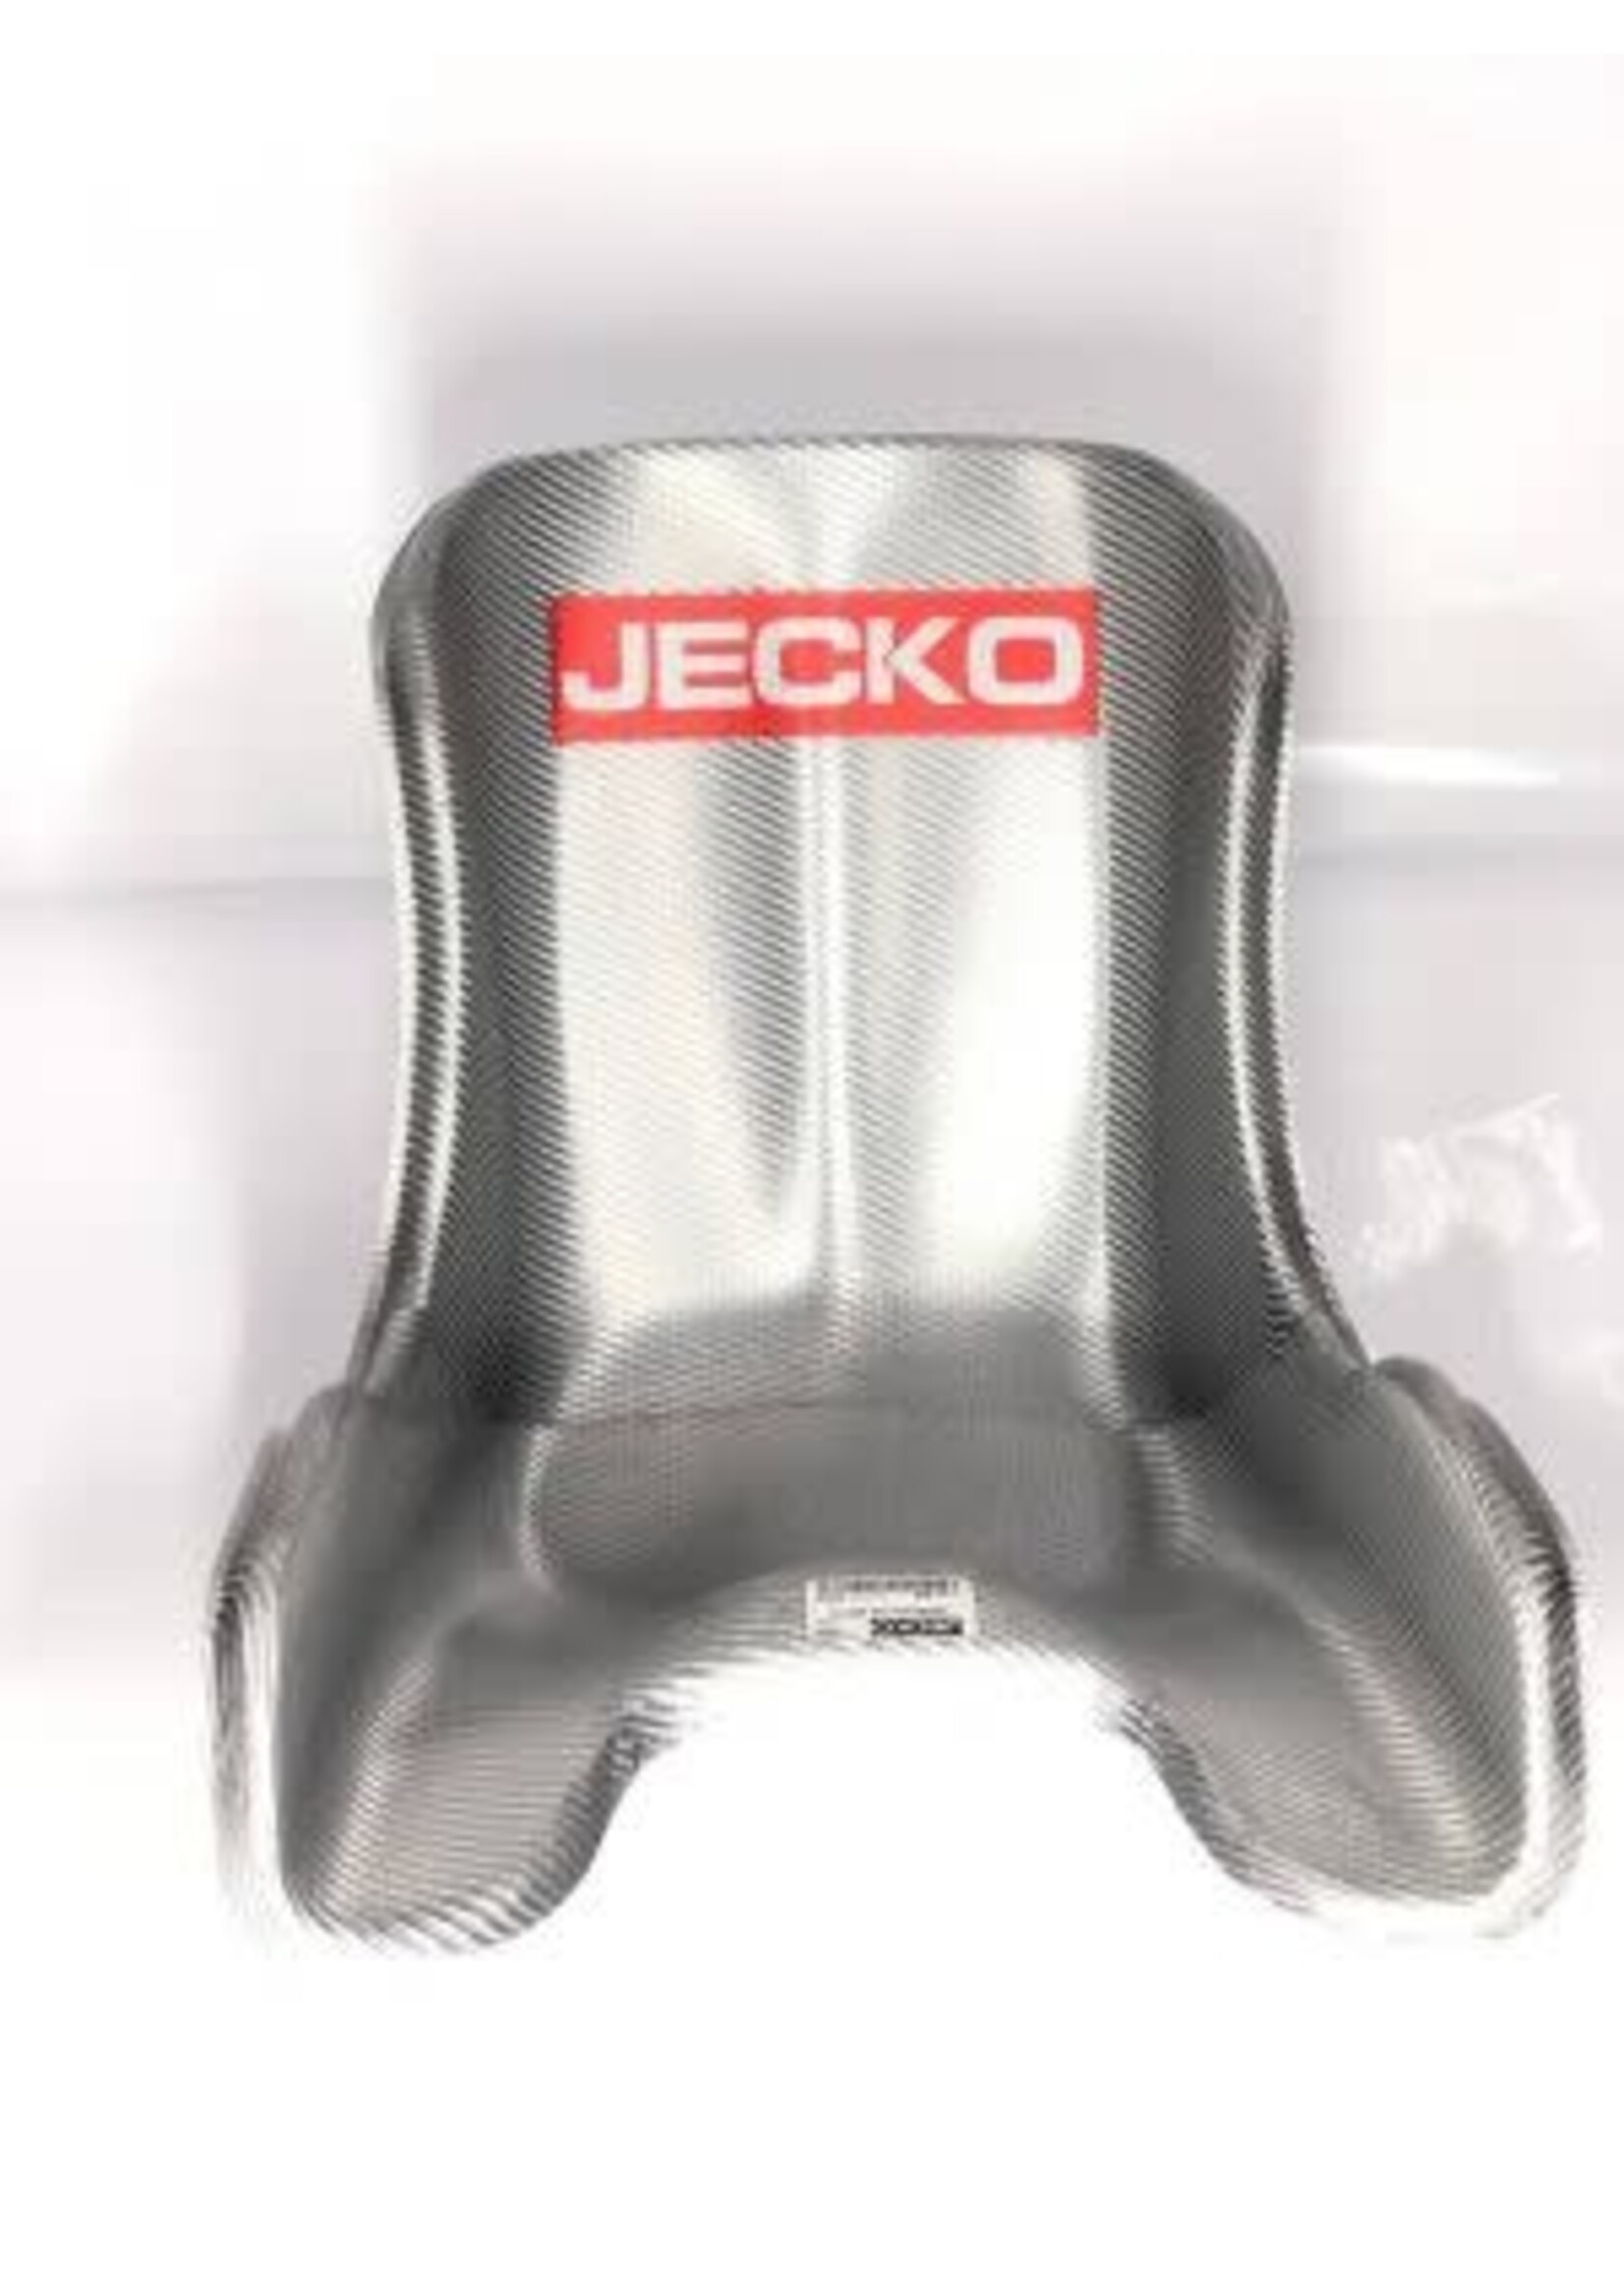 jecko JECKO C Seat